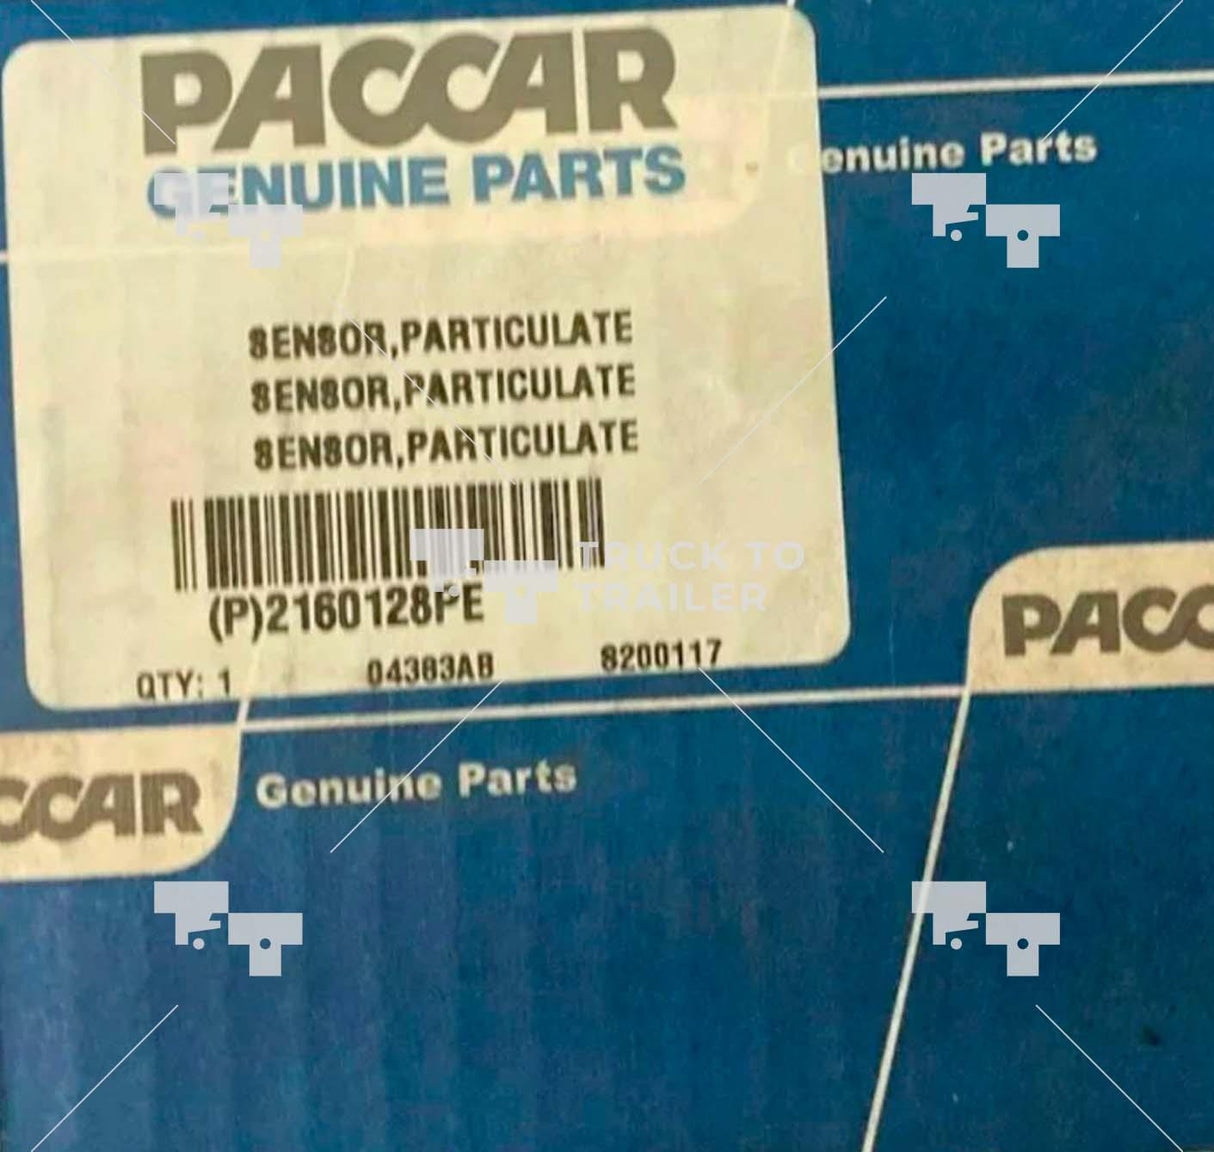 2160128PE Genuine Paccar Particulate Sensor Matter - Truck To Trailer